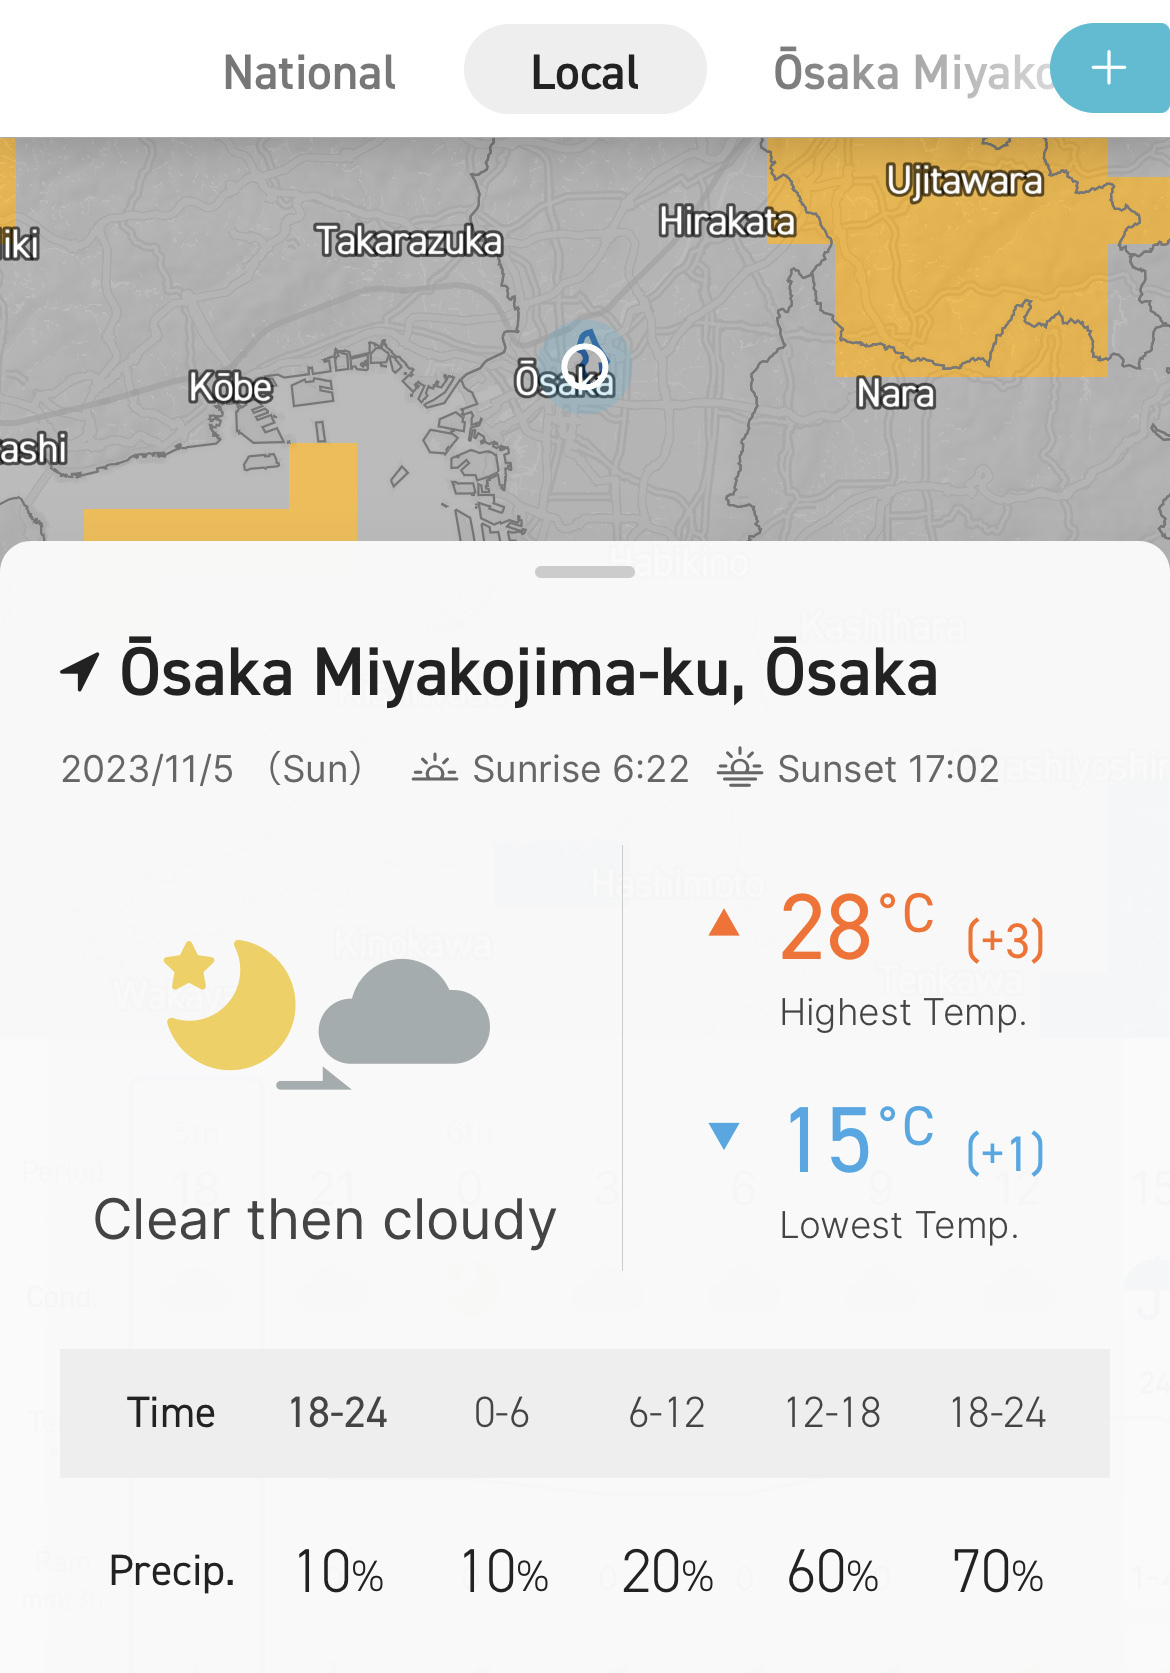 Screenshot of NERV weather app showing the high of 28° C in Osaka Miyakojima-ku